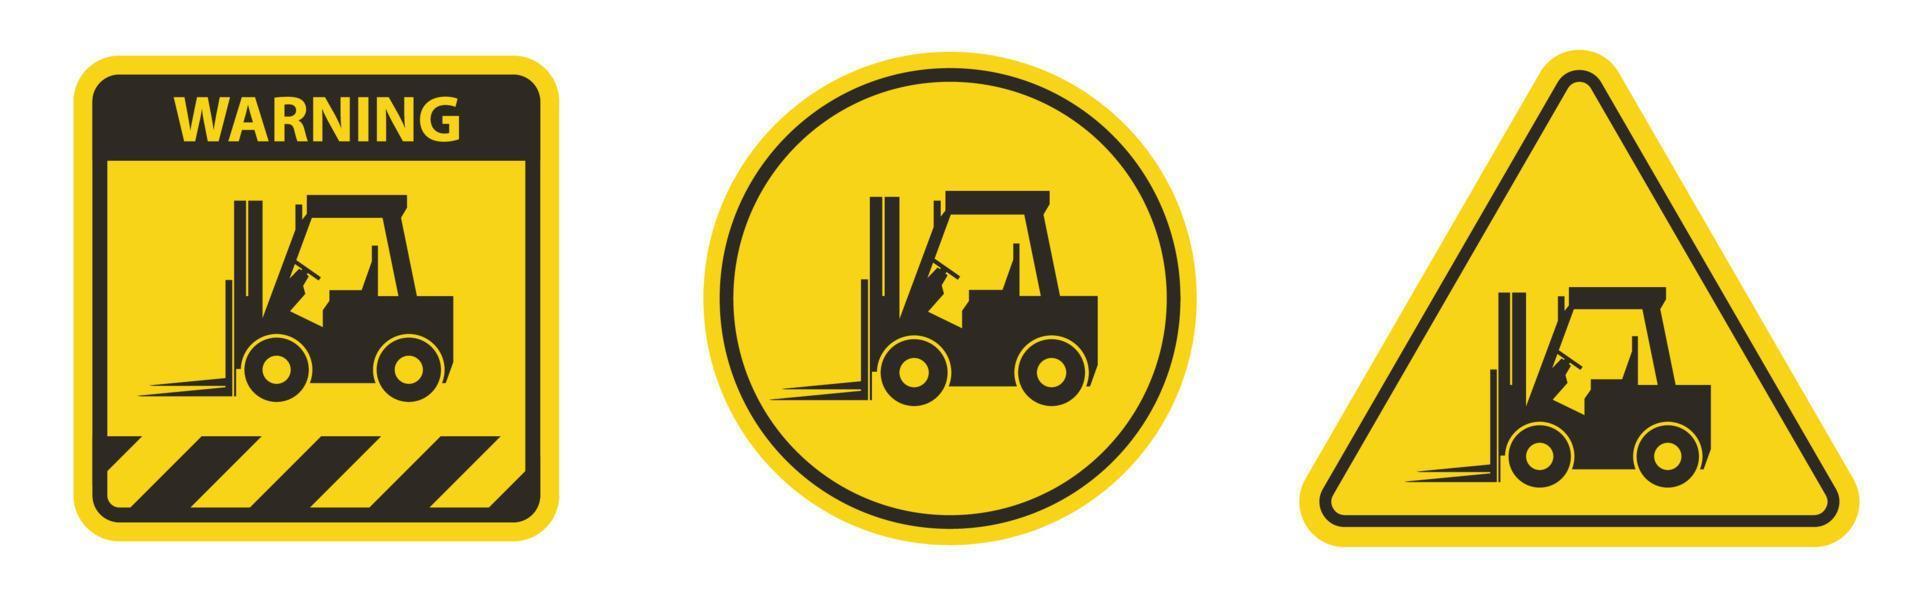 Forklift truck sign,Hazard warning forklift vector